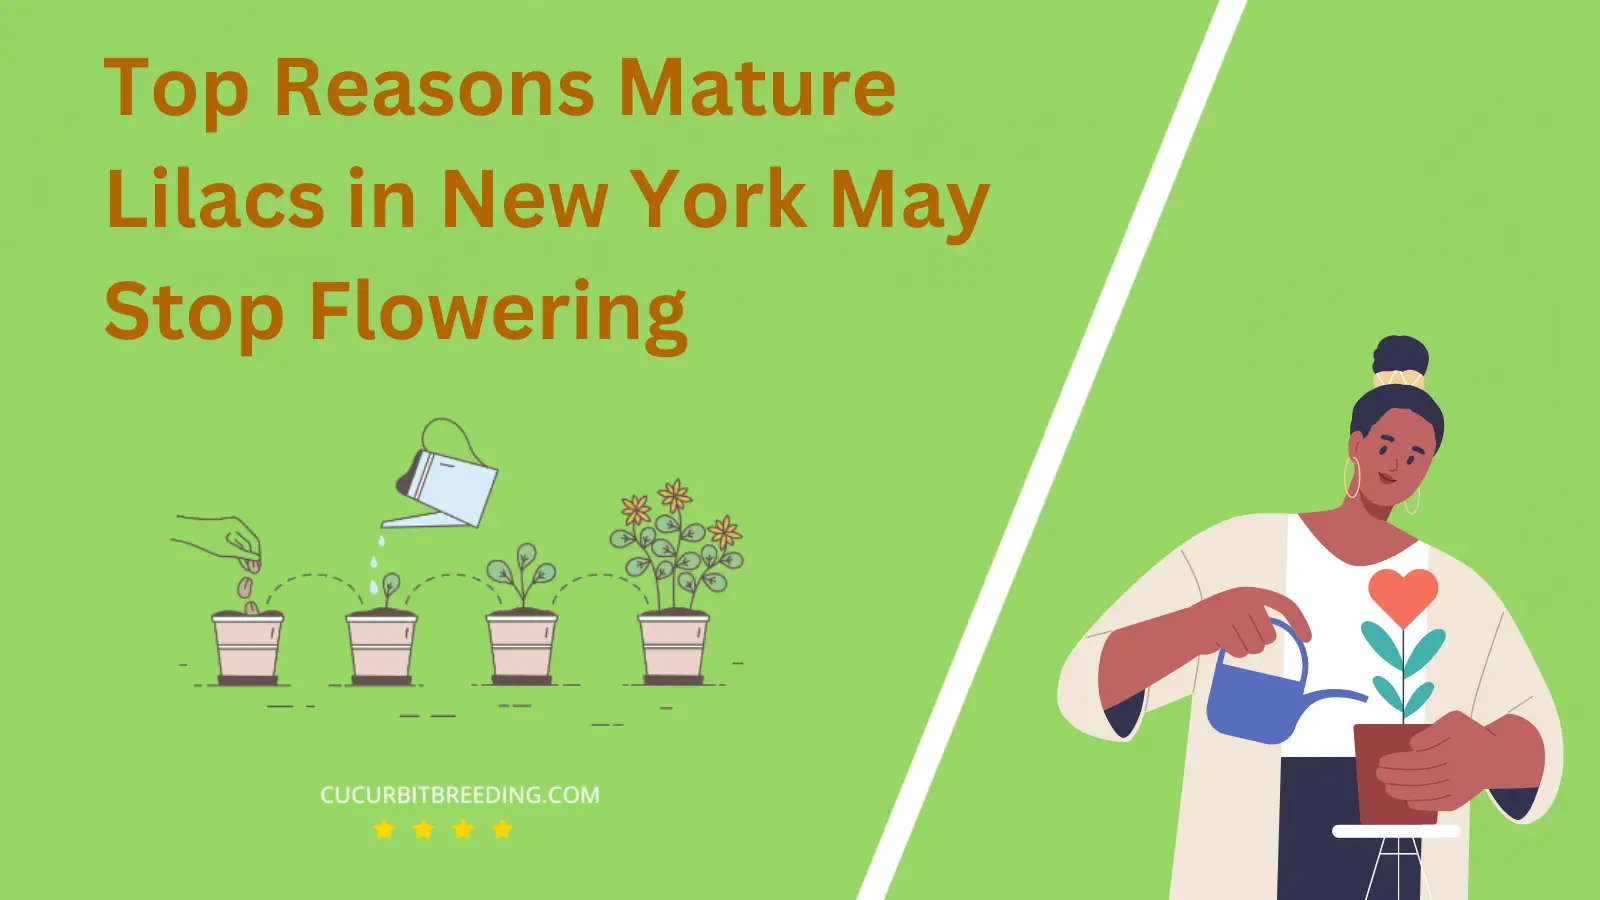 Top Reasons Mature Lilacs in New York May Stop Flowering